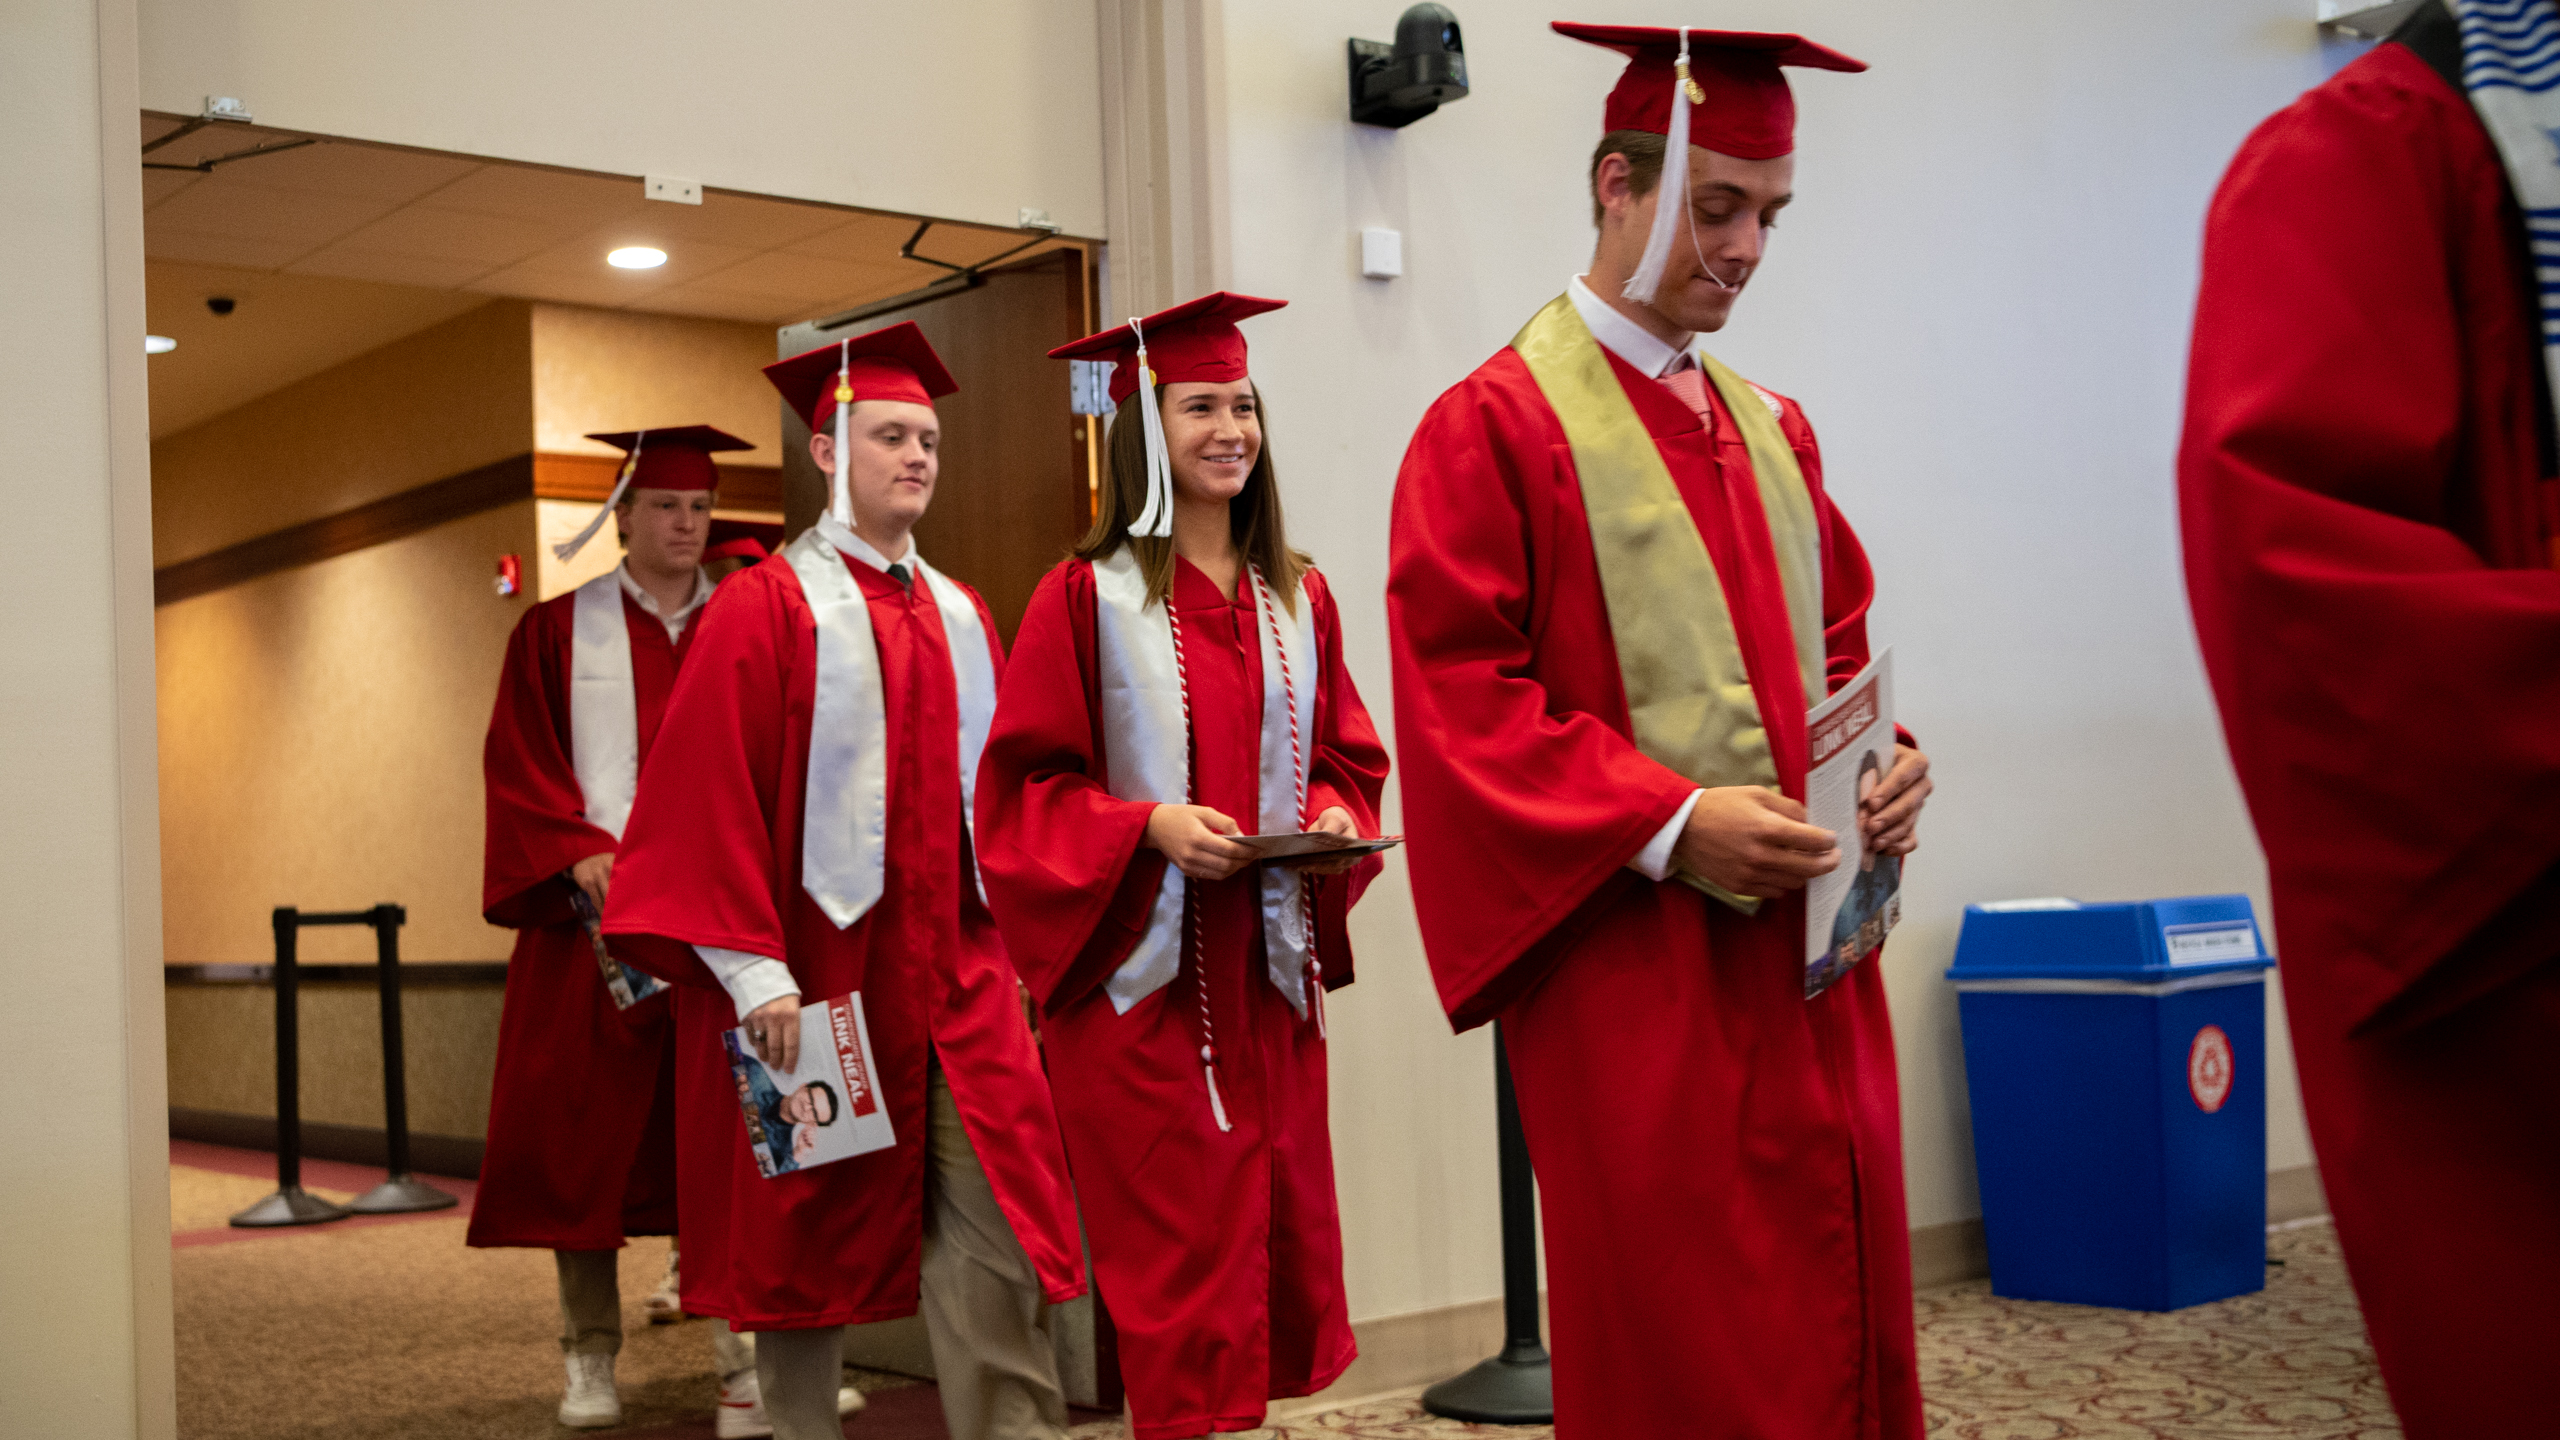 Undergraduates walking into commencement